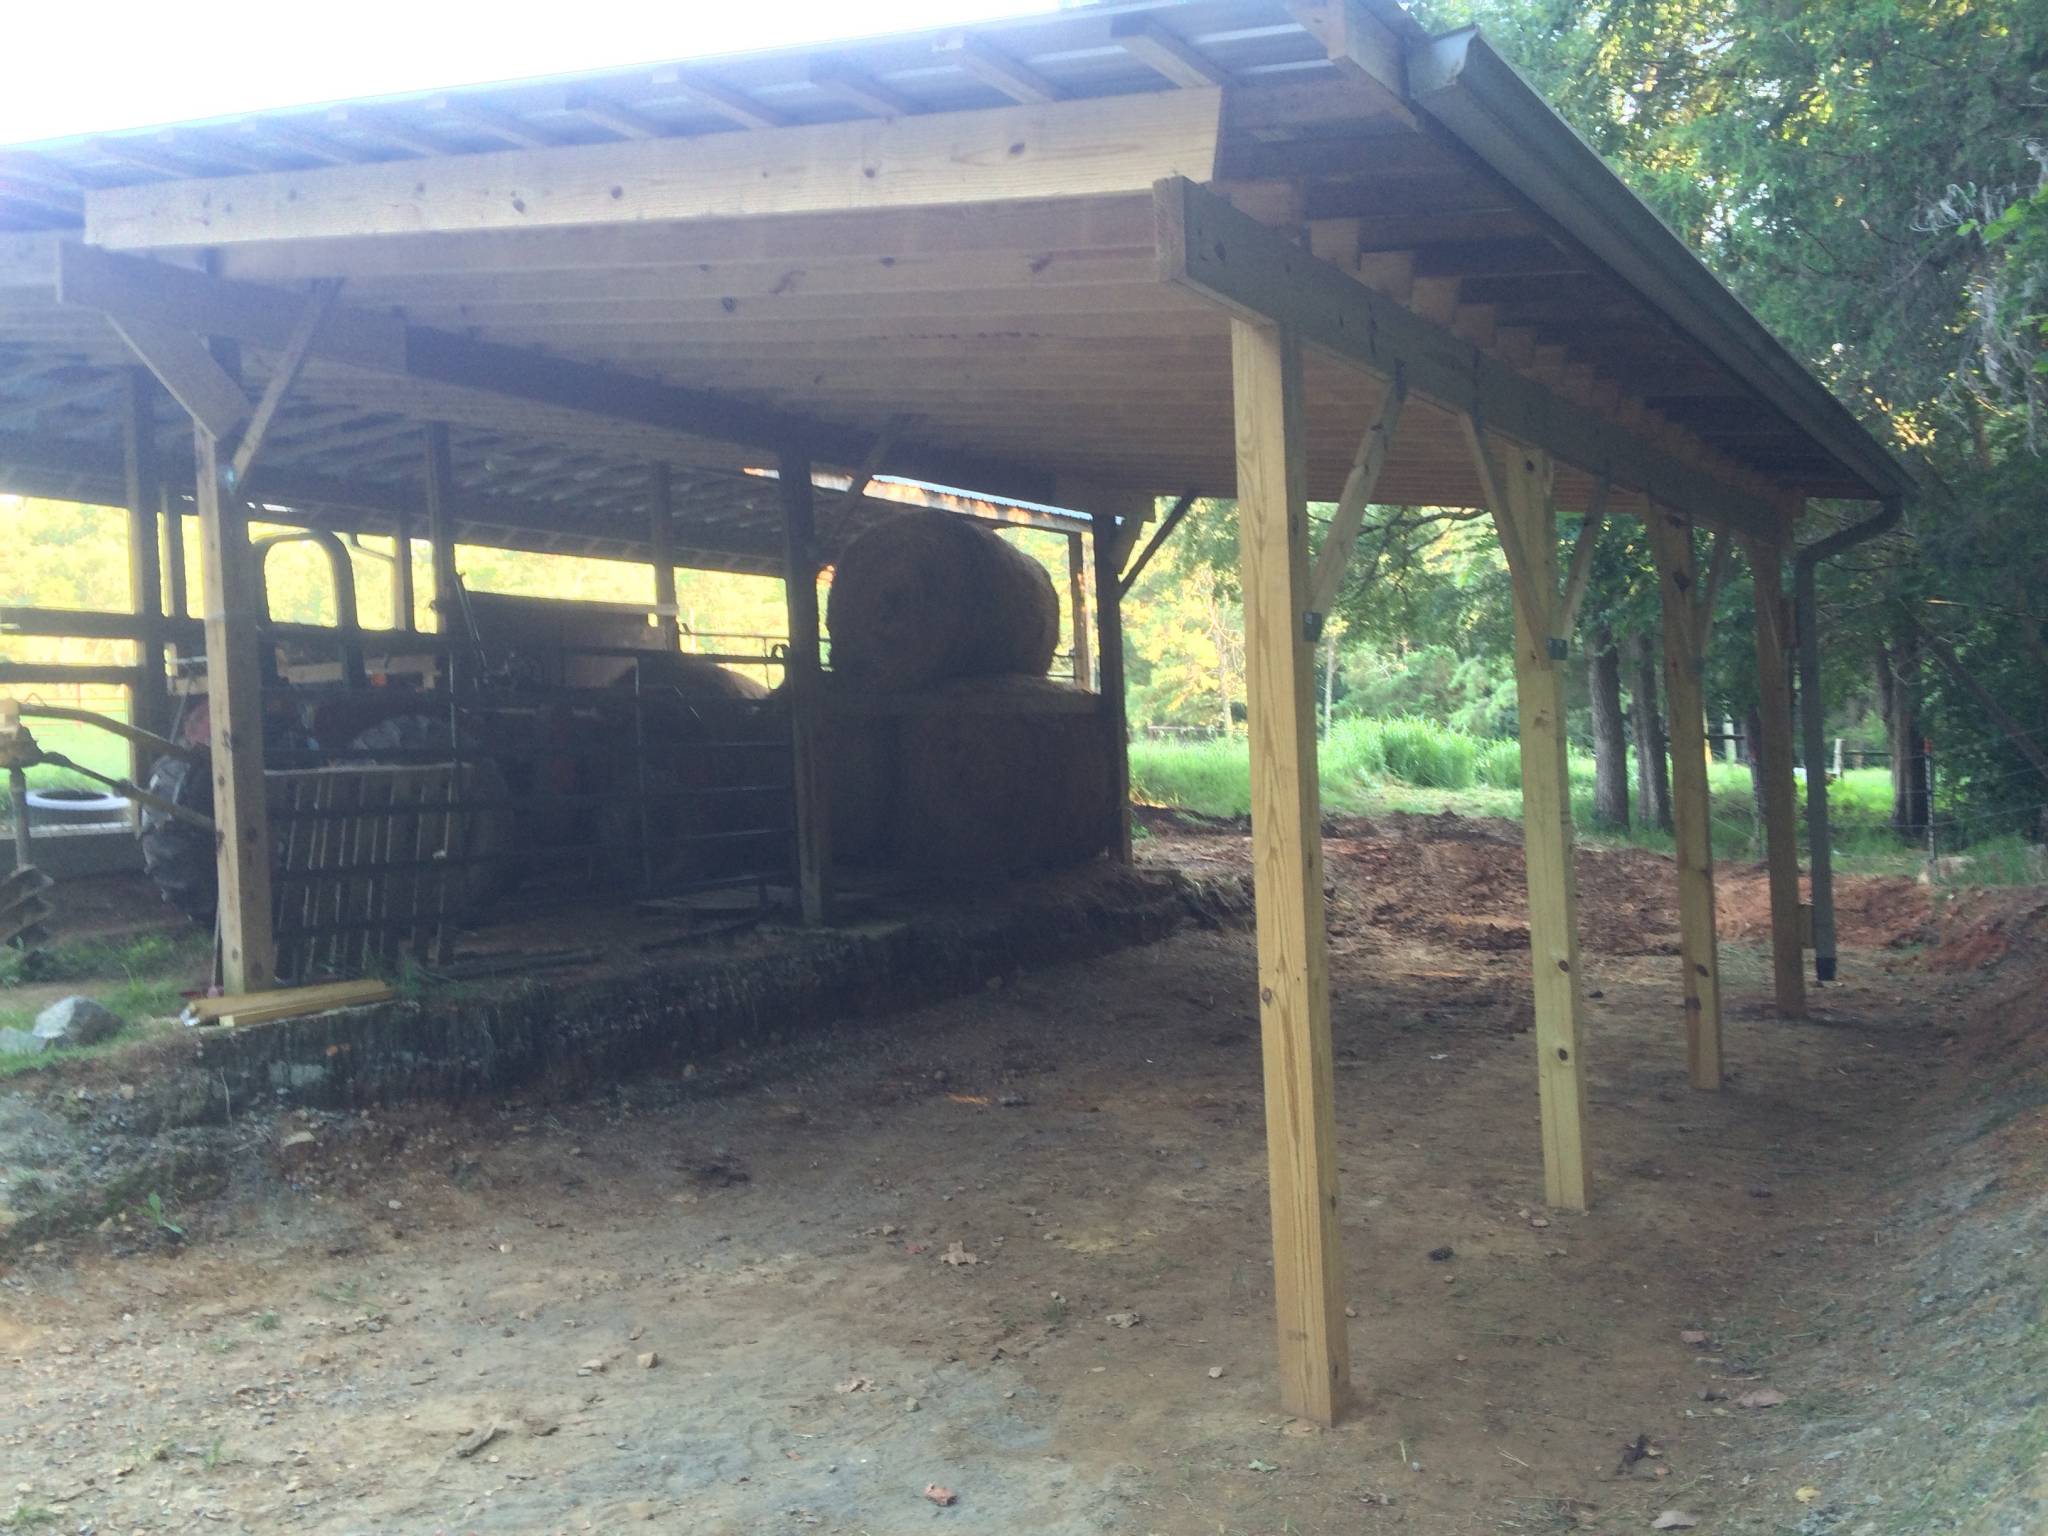 hay barn build